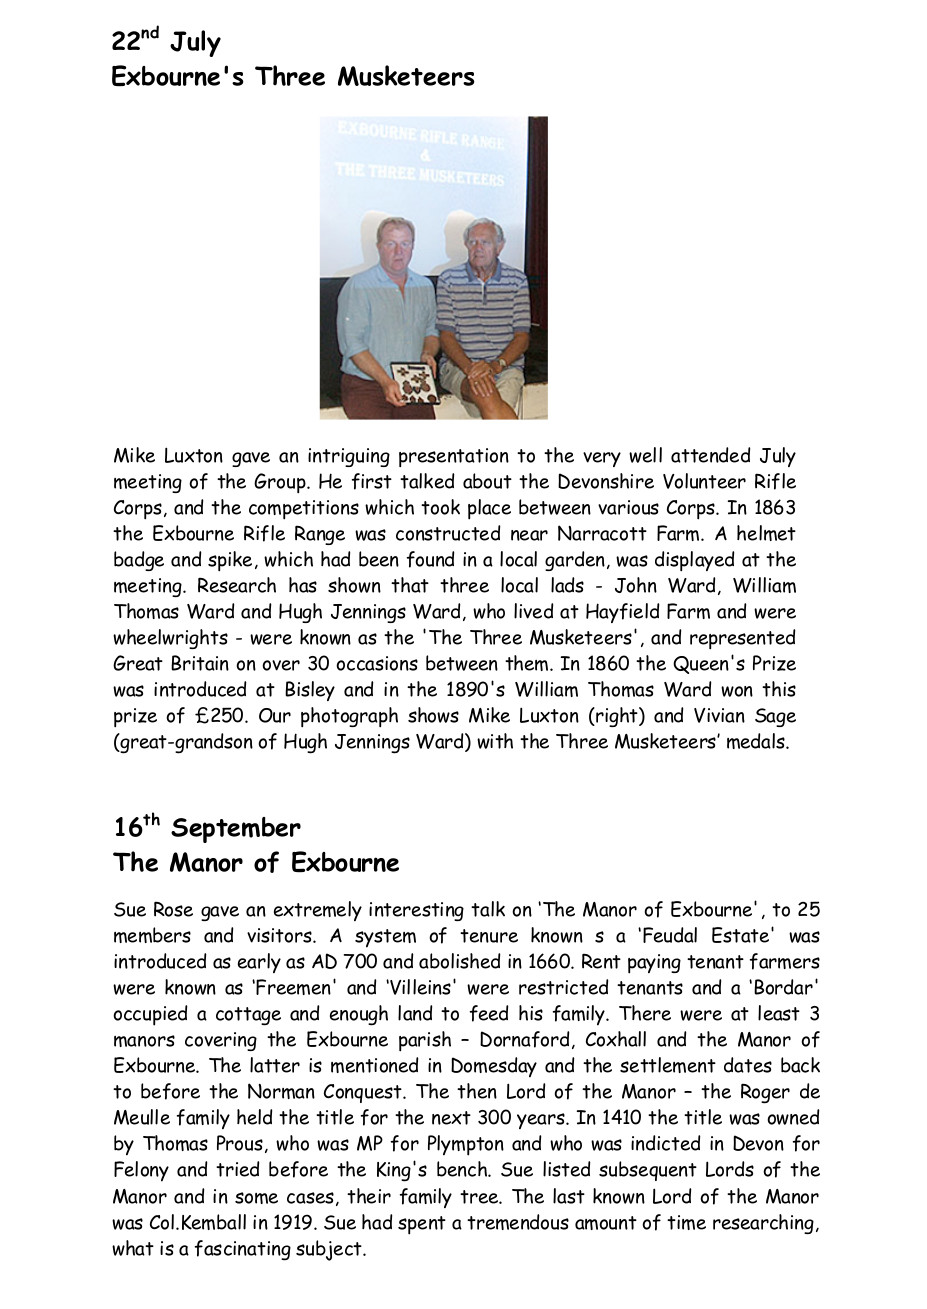 Exbourne Local History Group 2014-2015